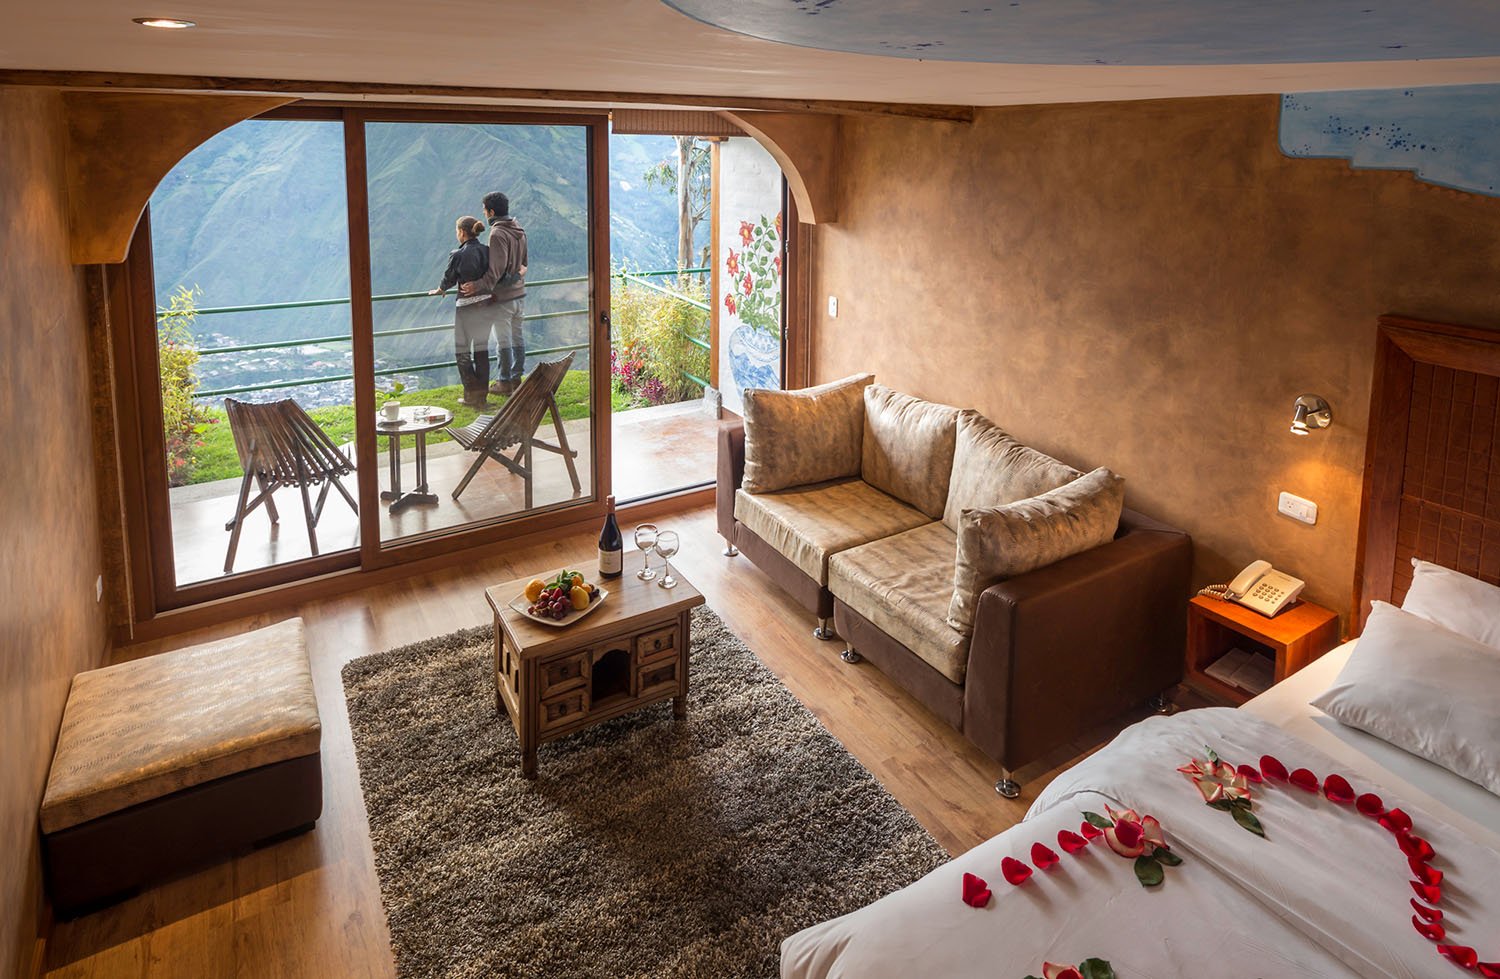 Couple on Terrace Romantic Room Amor Celestial 33 - Luna Volcan - Hotel en Banos Ecuador.jpg